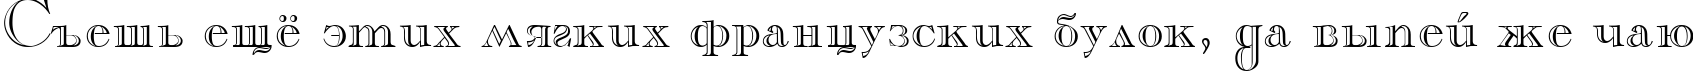 Пример написания шрифтом Casper текста на русском